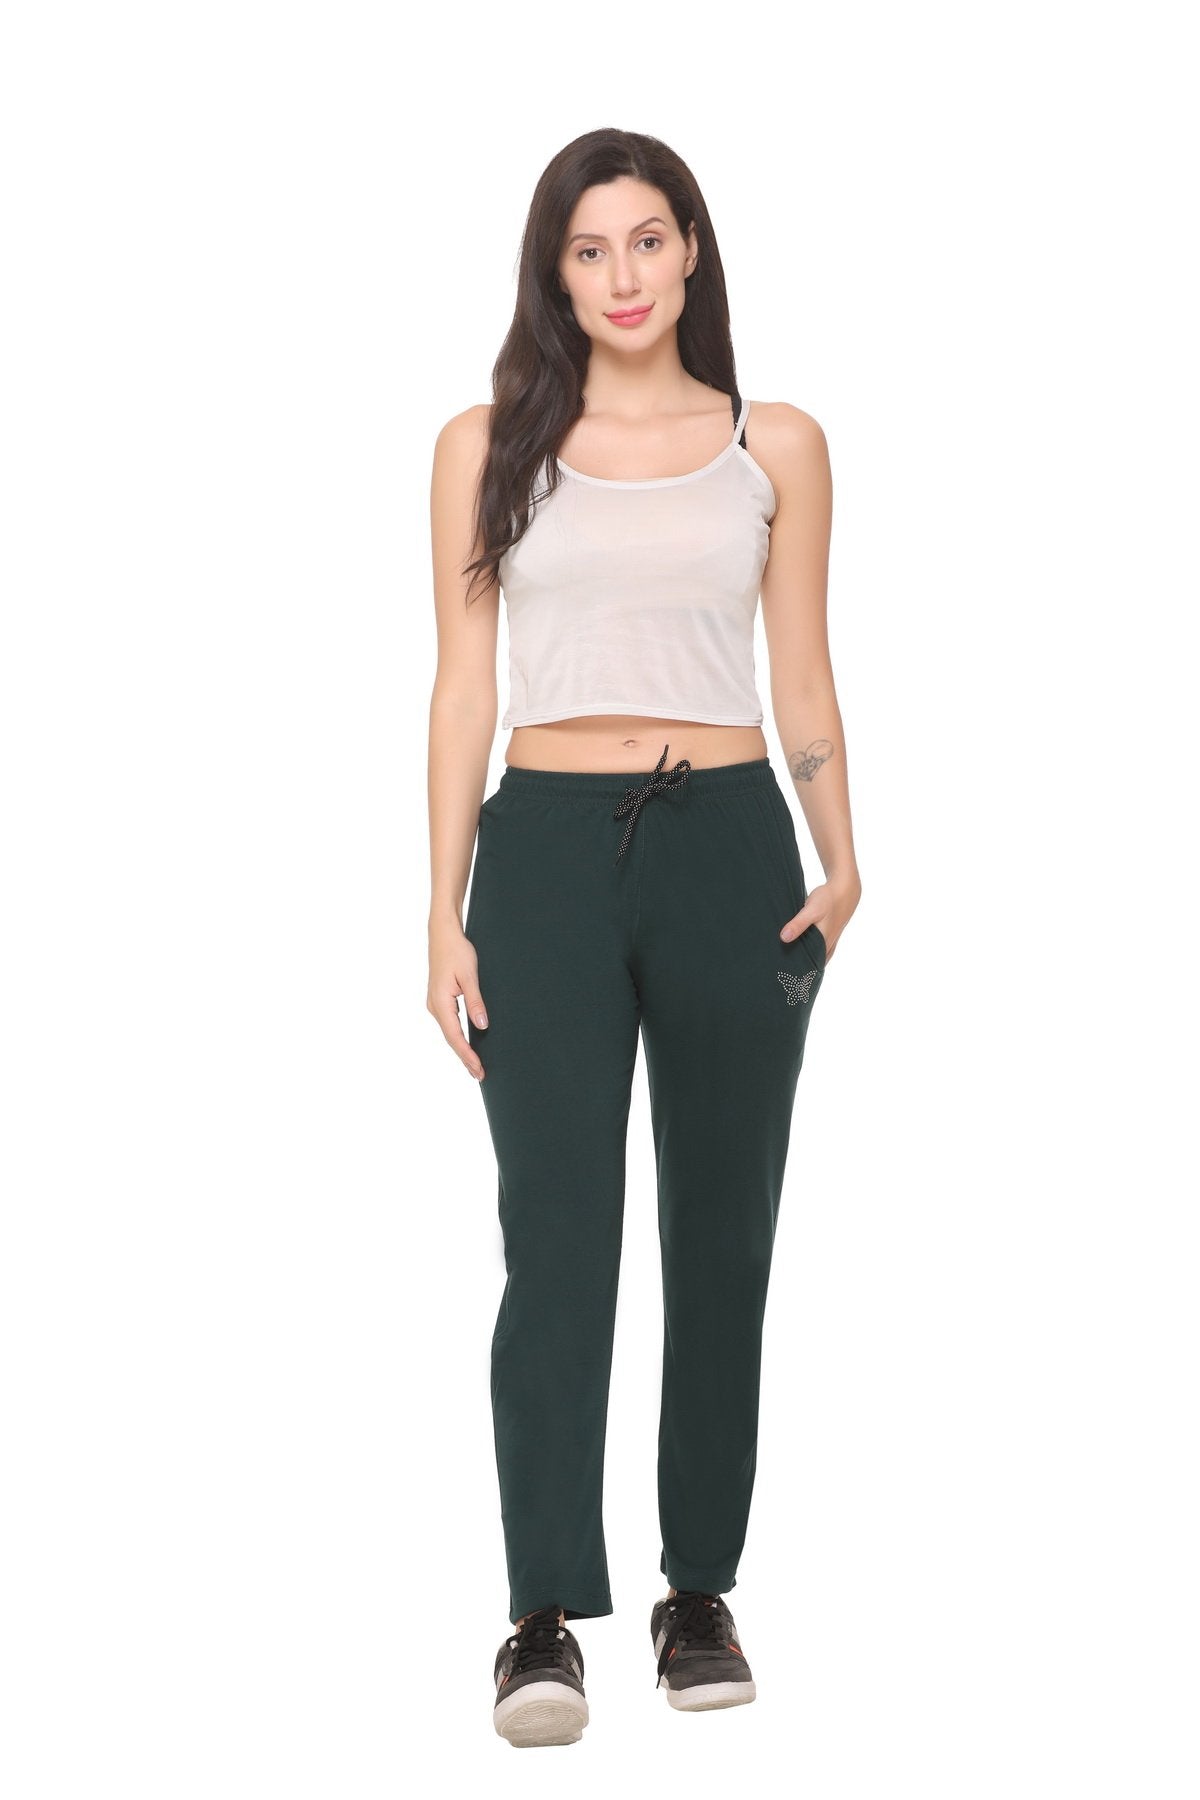 FUBACK Regular Fit Women Green Trousers - Buy FUBACK Regular Fit Women  Green Trousers Online at Best Prices in India | Flipkart.com